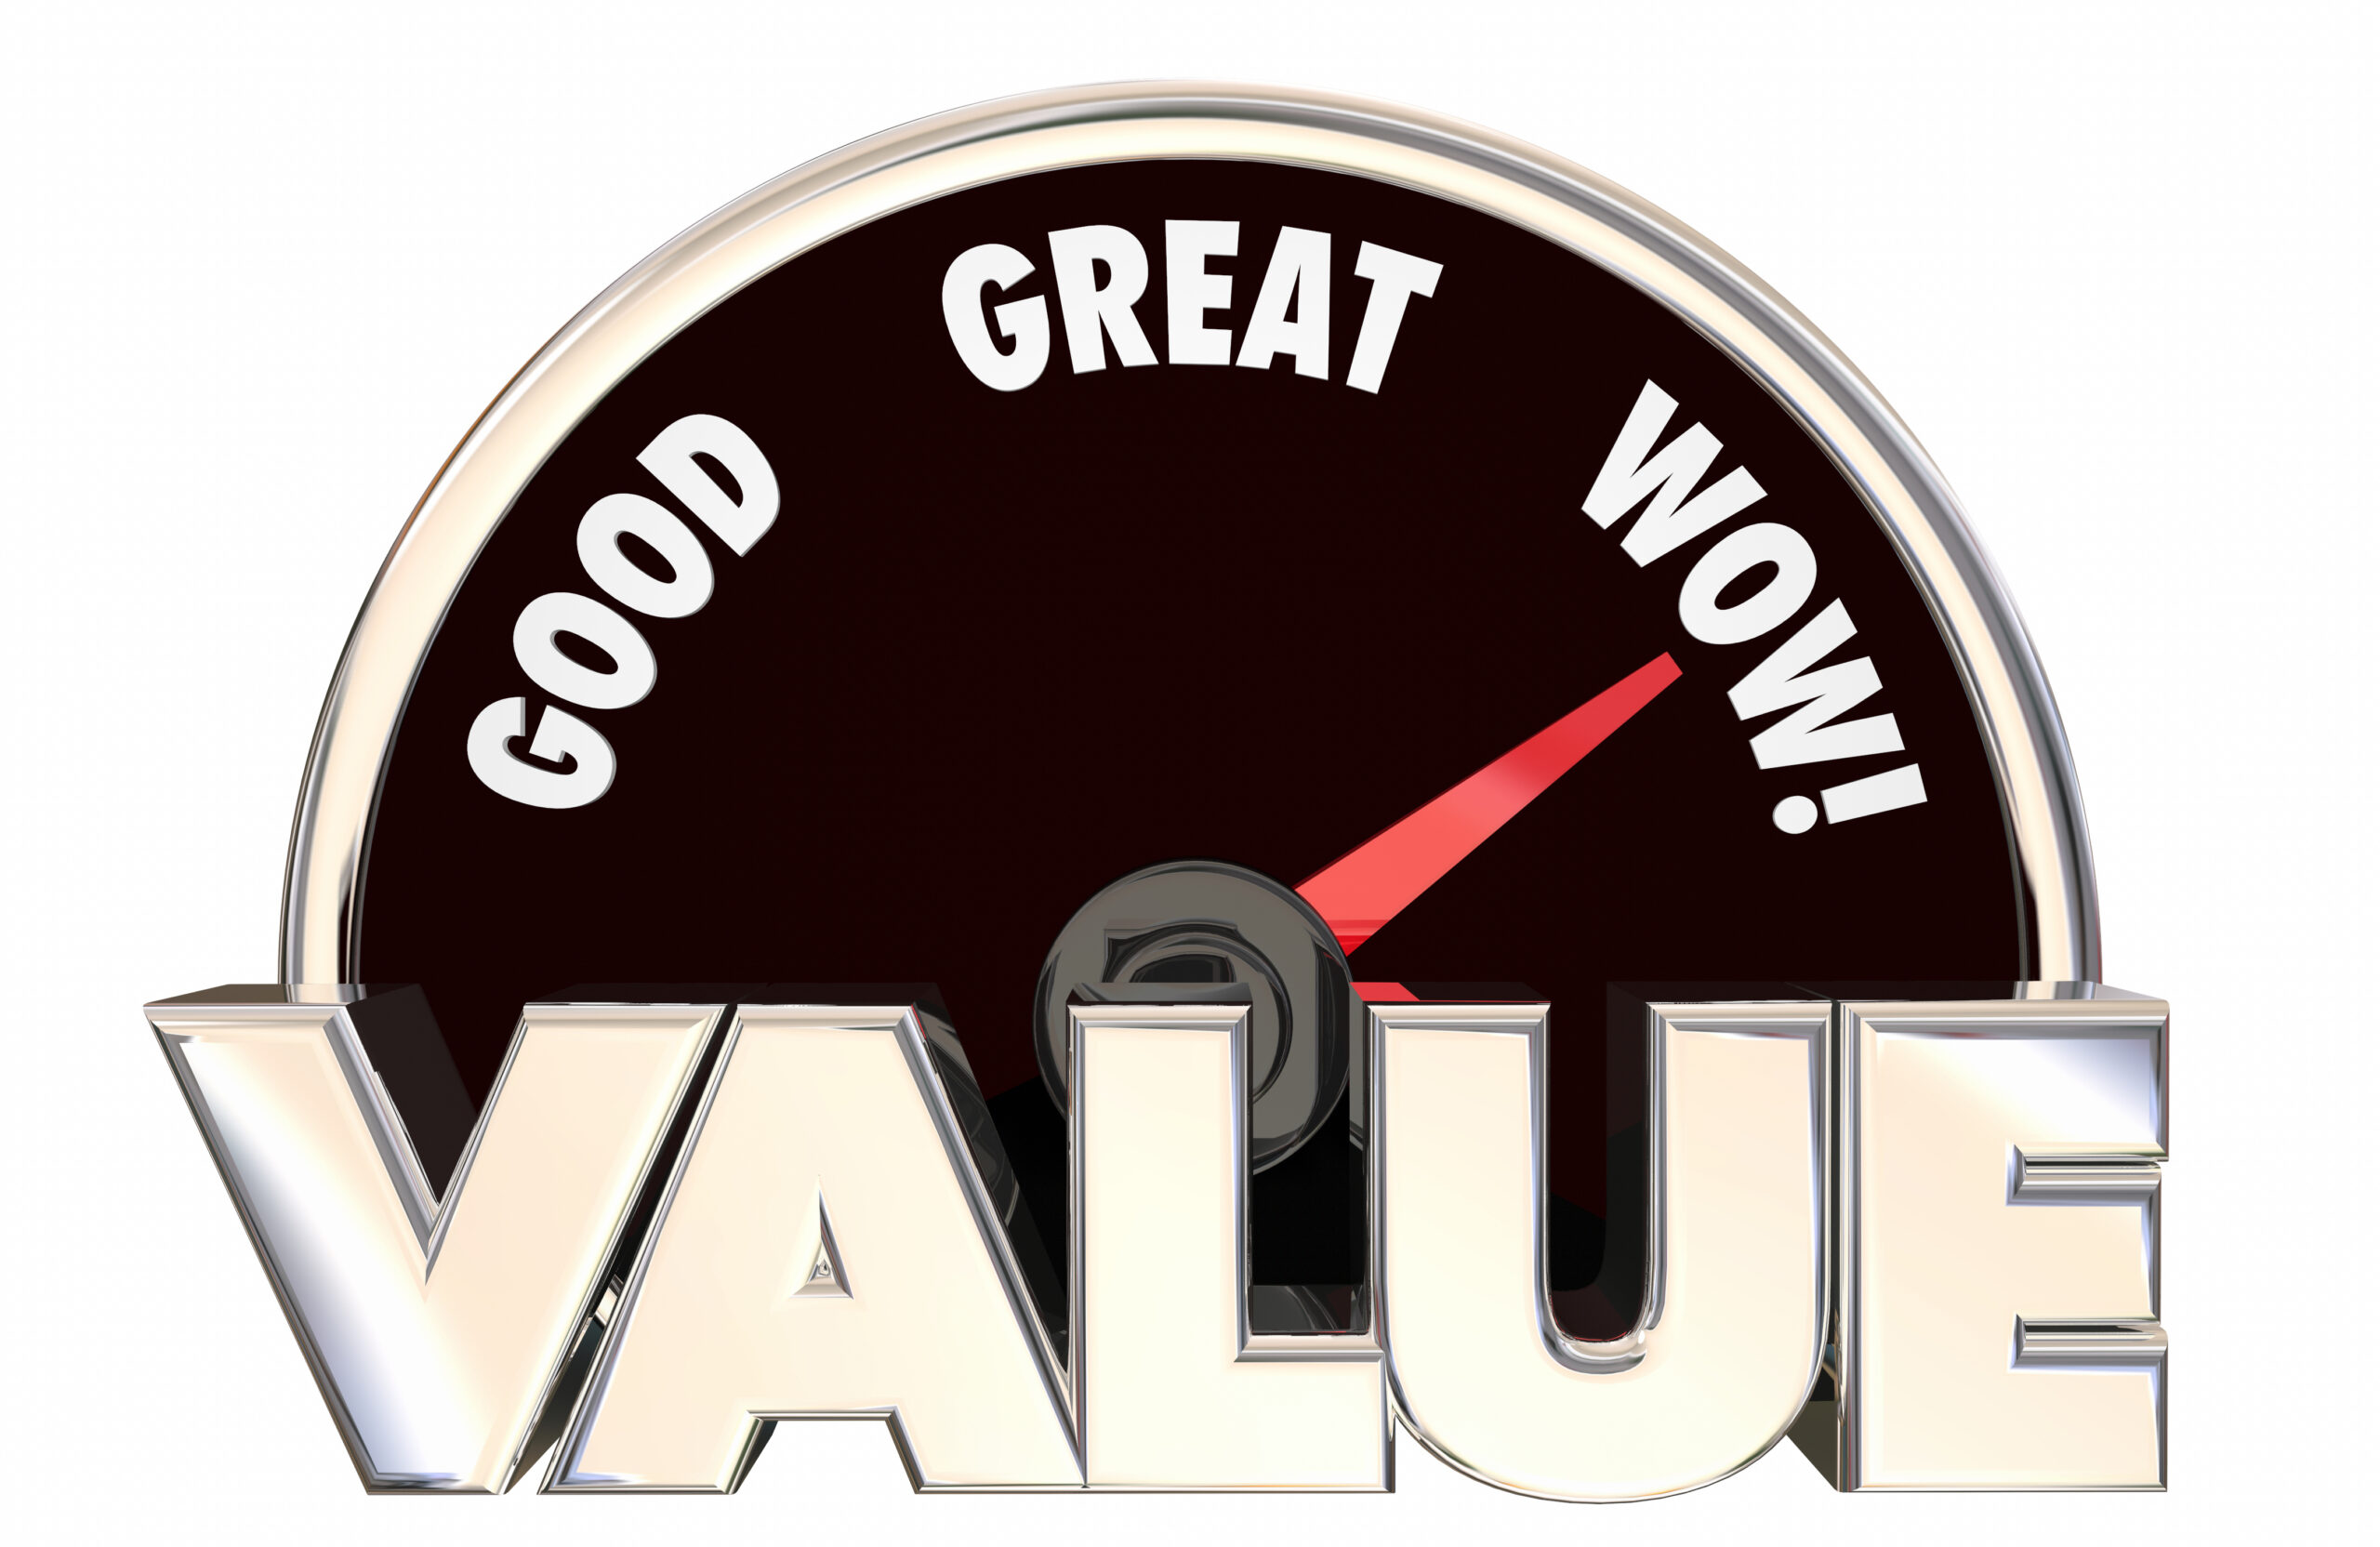 Value,Top,Best,High,Good,Buy,Purchase,Speedometer,3d,Words